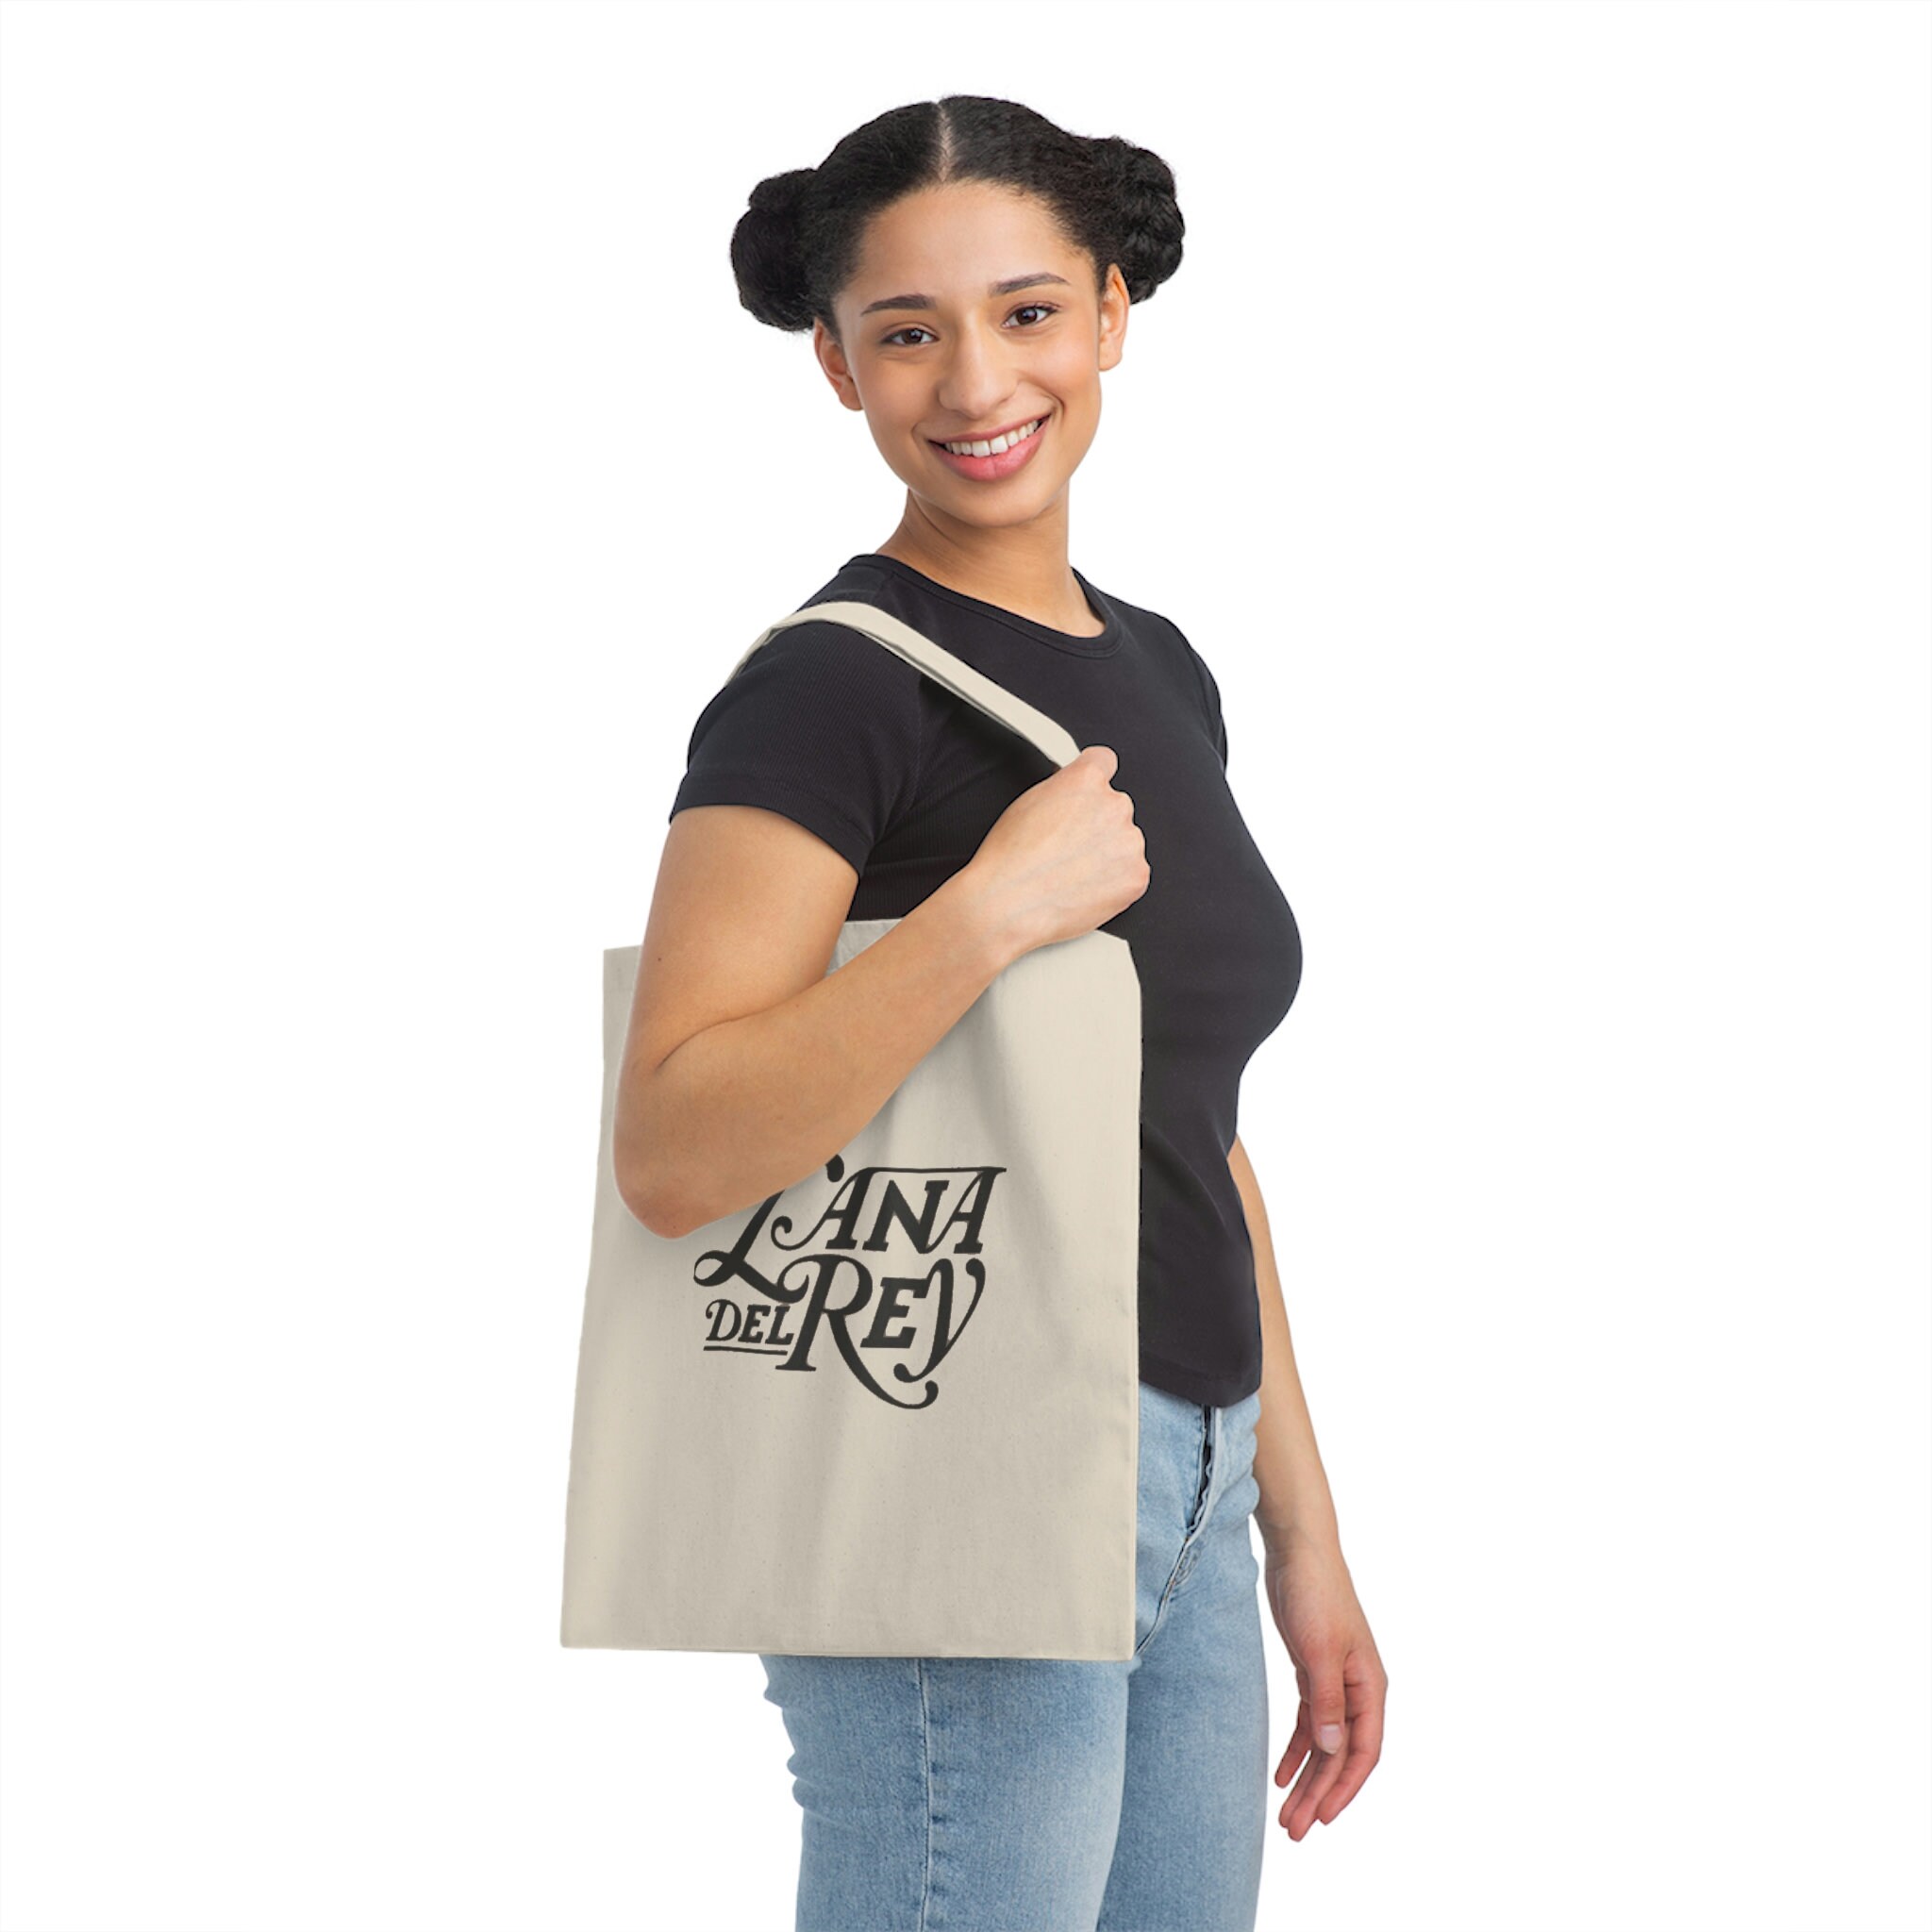 Discover Lana del ray Canvas Tote Bag